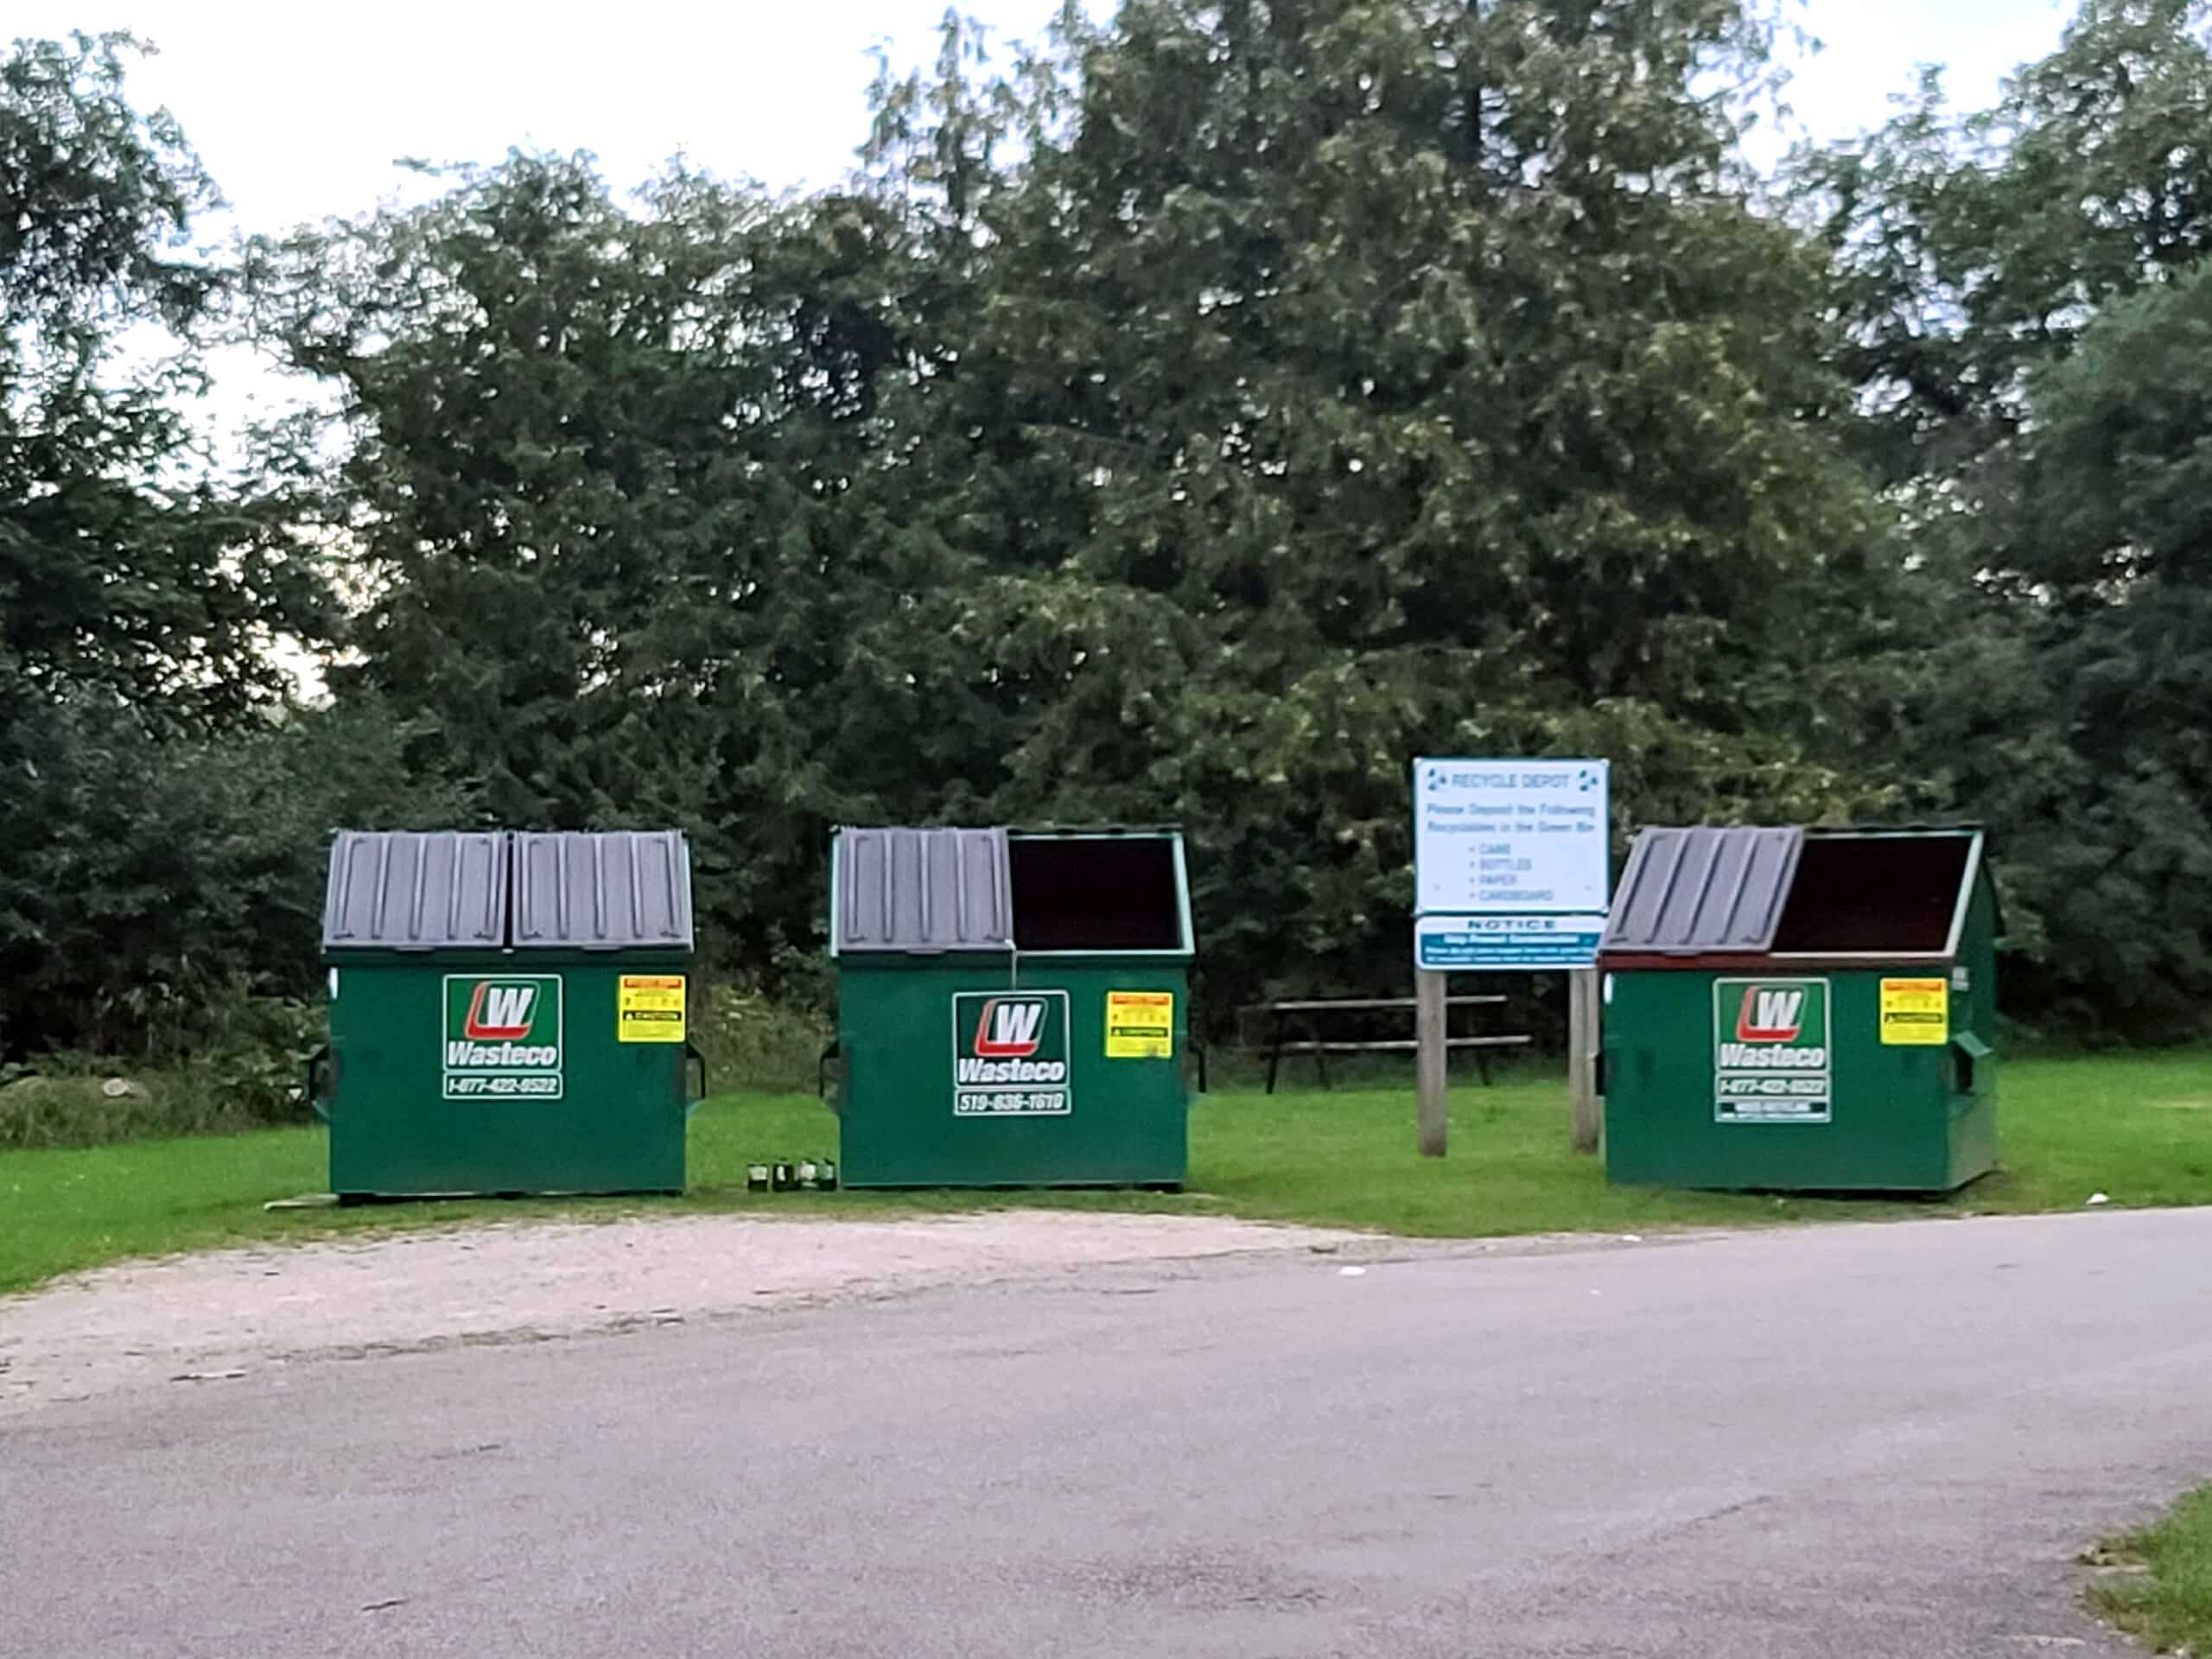 3 large green recycling bins.